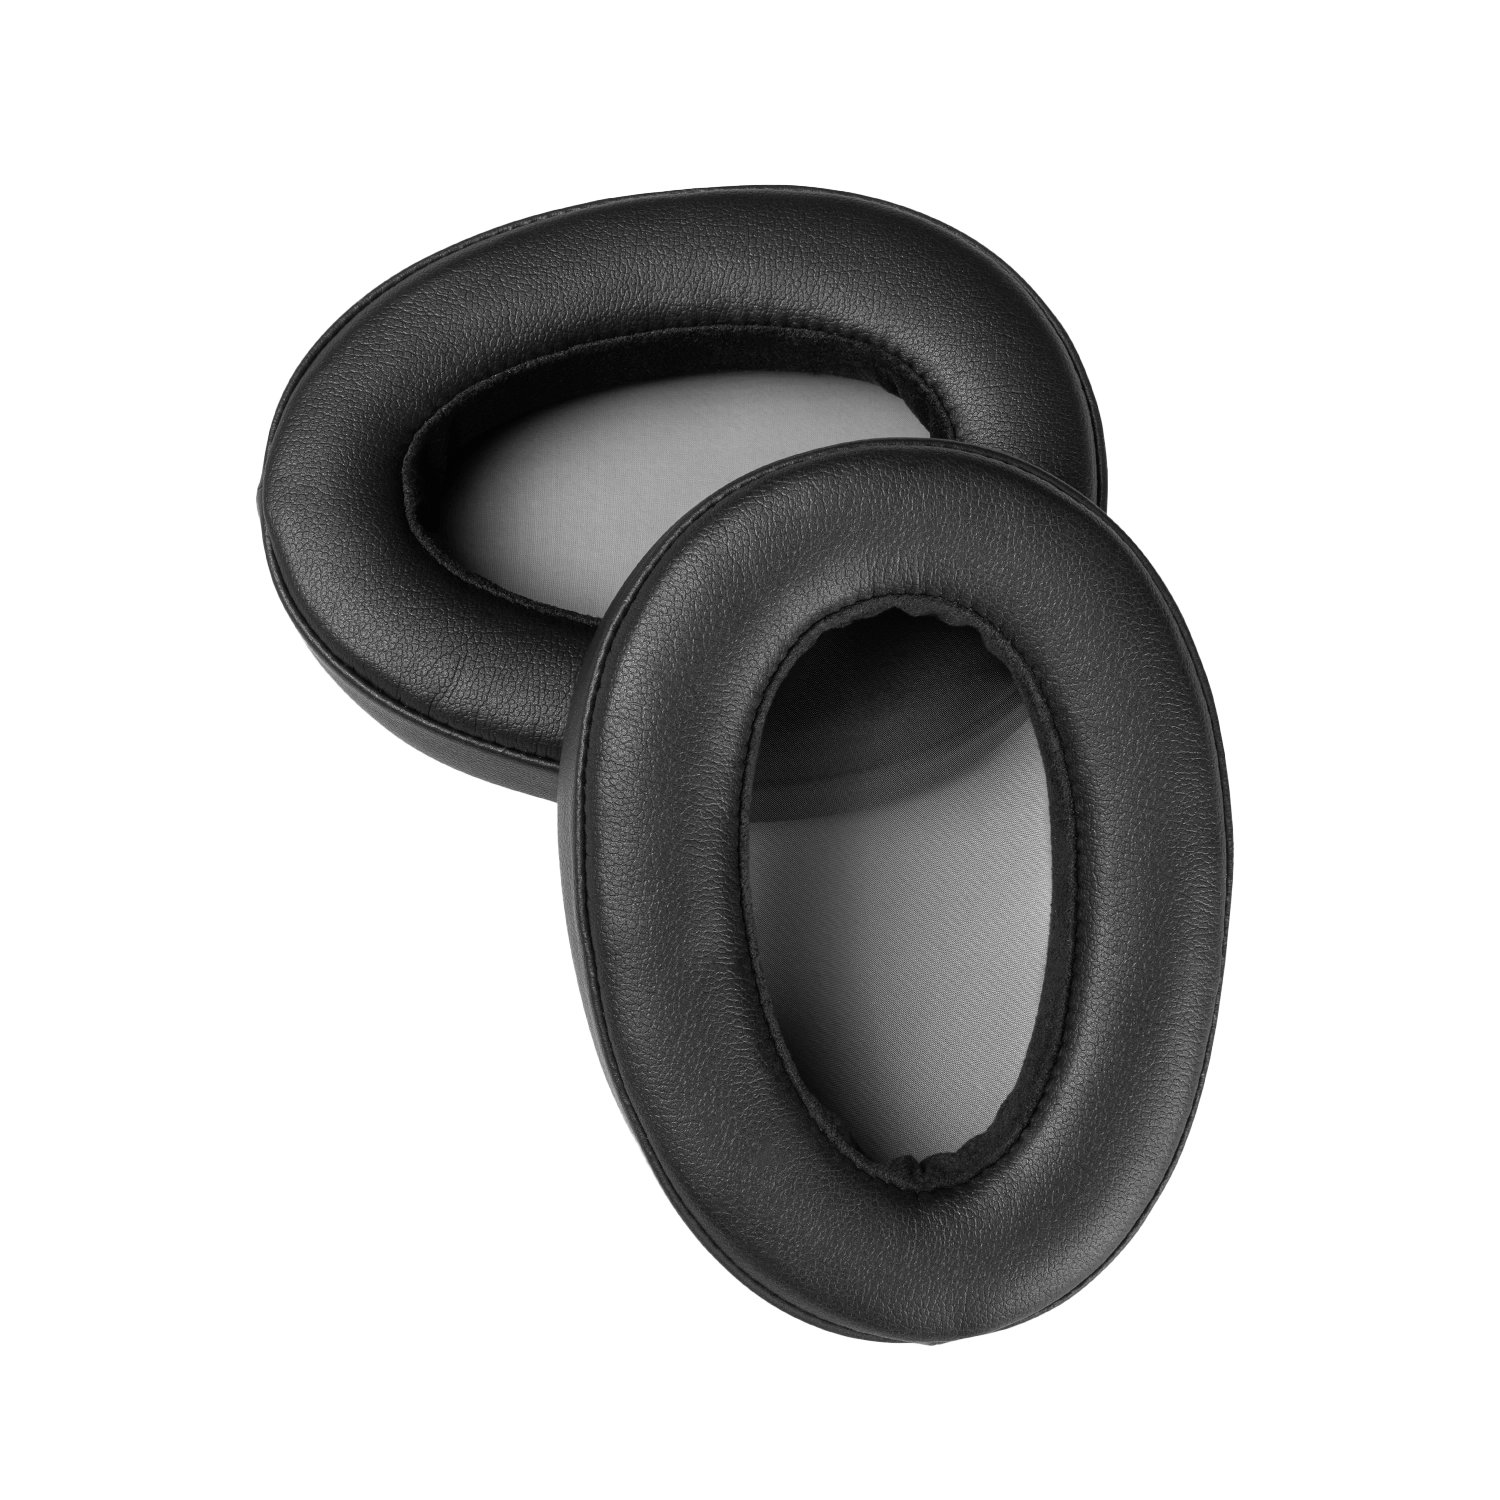 LIRIC EAR PADS KIT